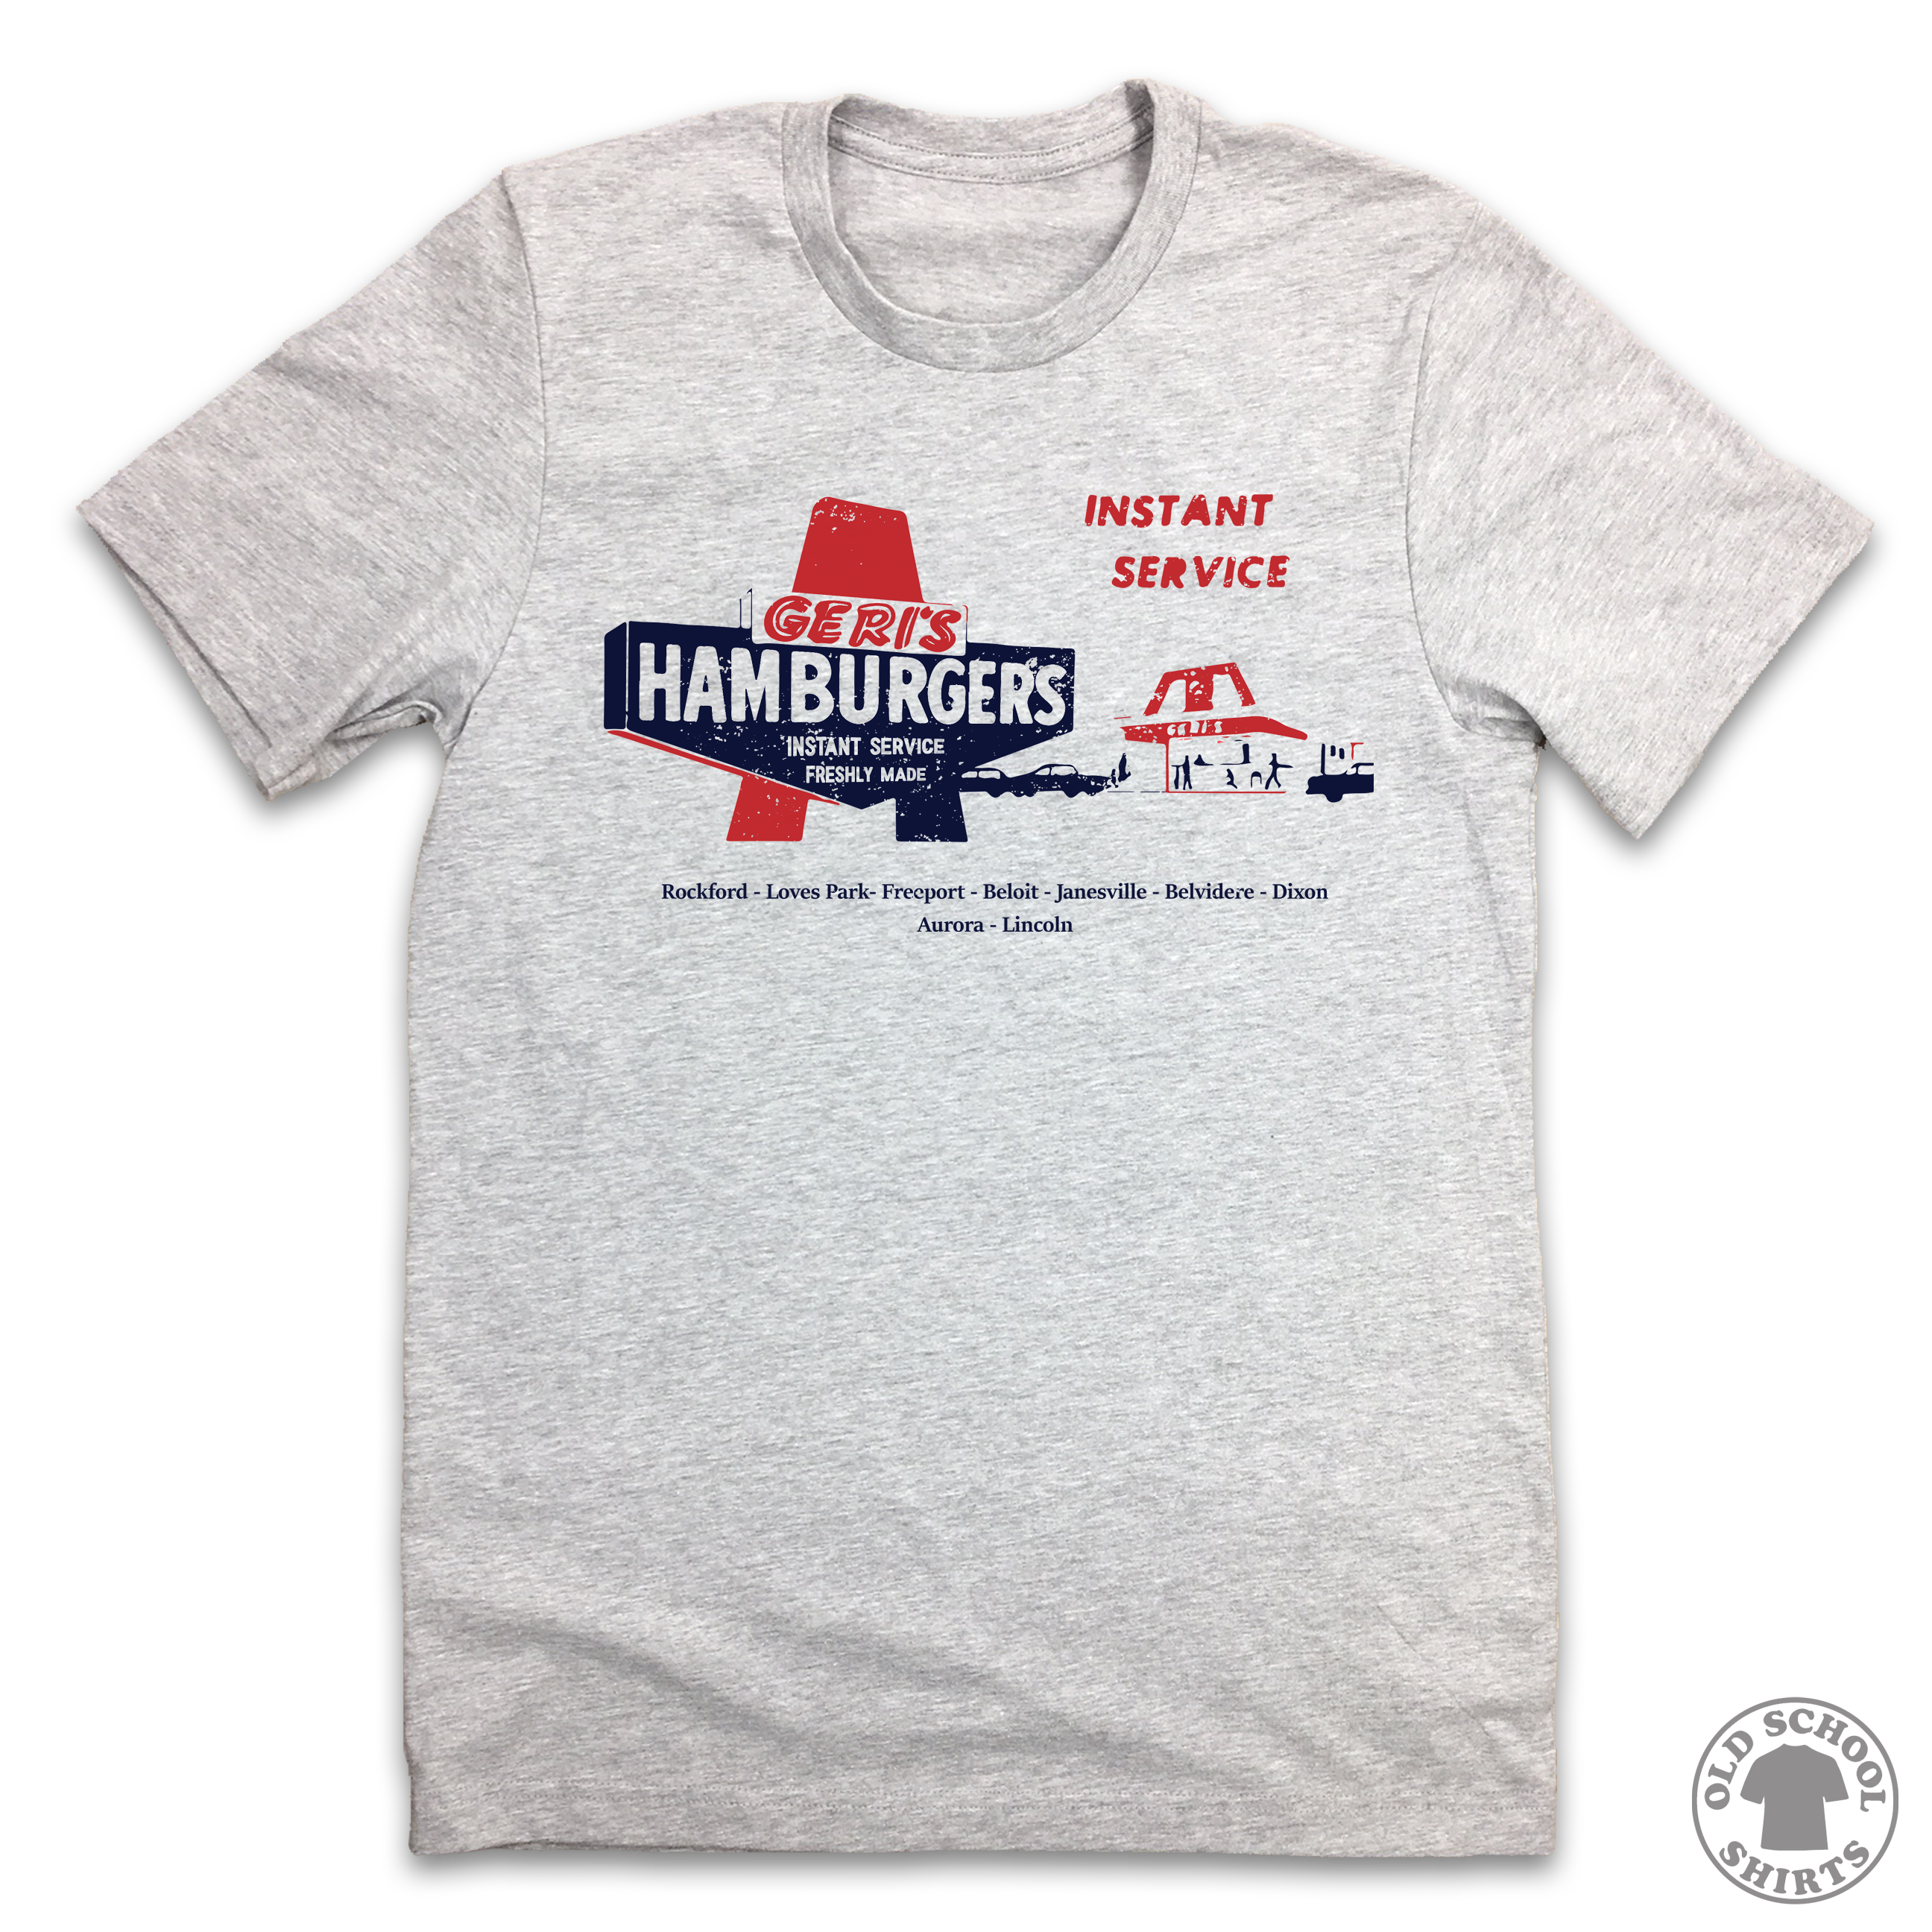 Geri's Hamburgers - Old School Shirts- Retro Sports T Shirts